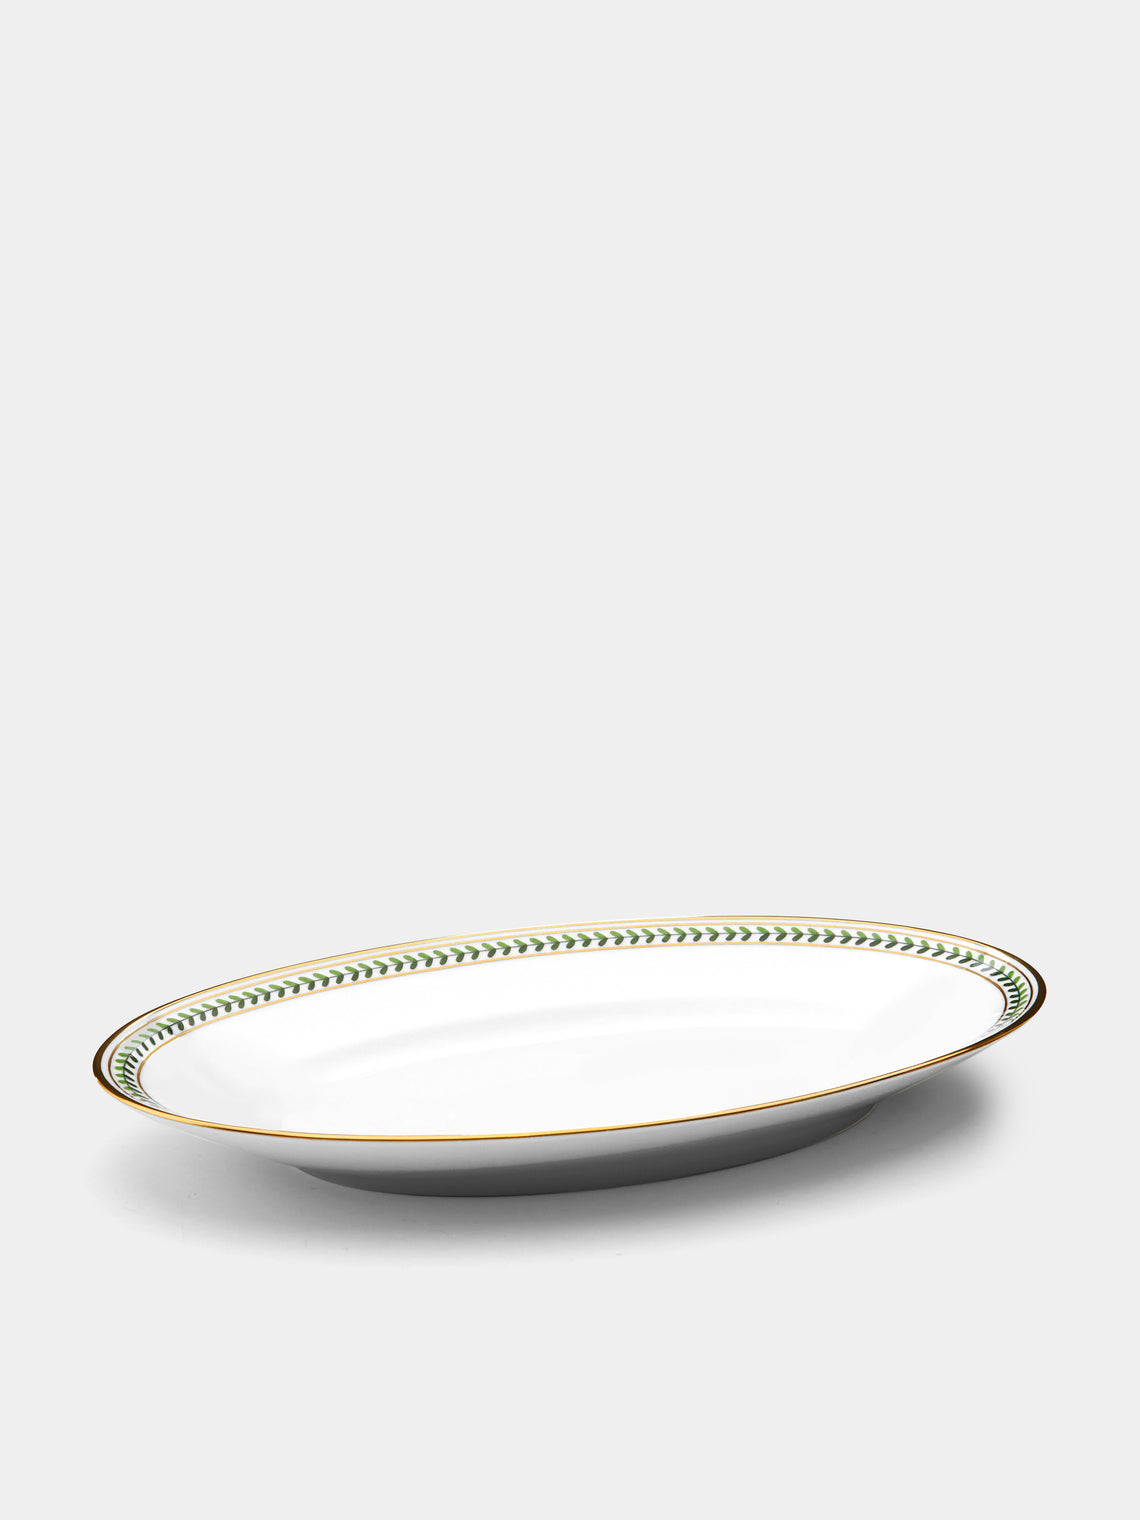 Augarten - Leafed Edge Hand-Painted Porcelain Serving Platter -  - ABASK